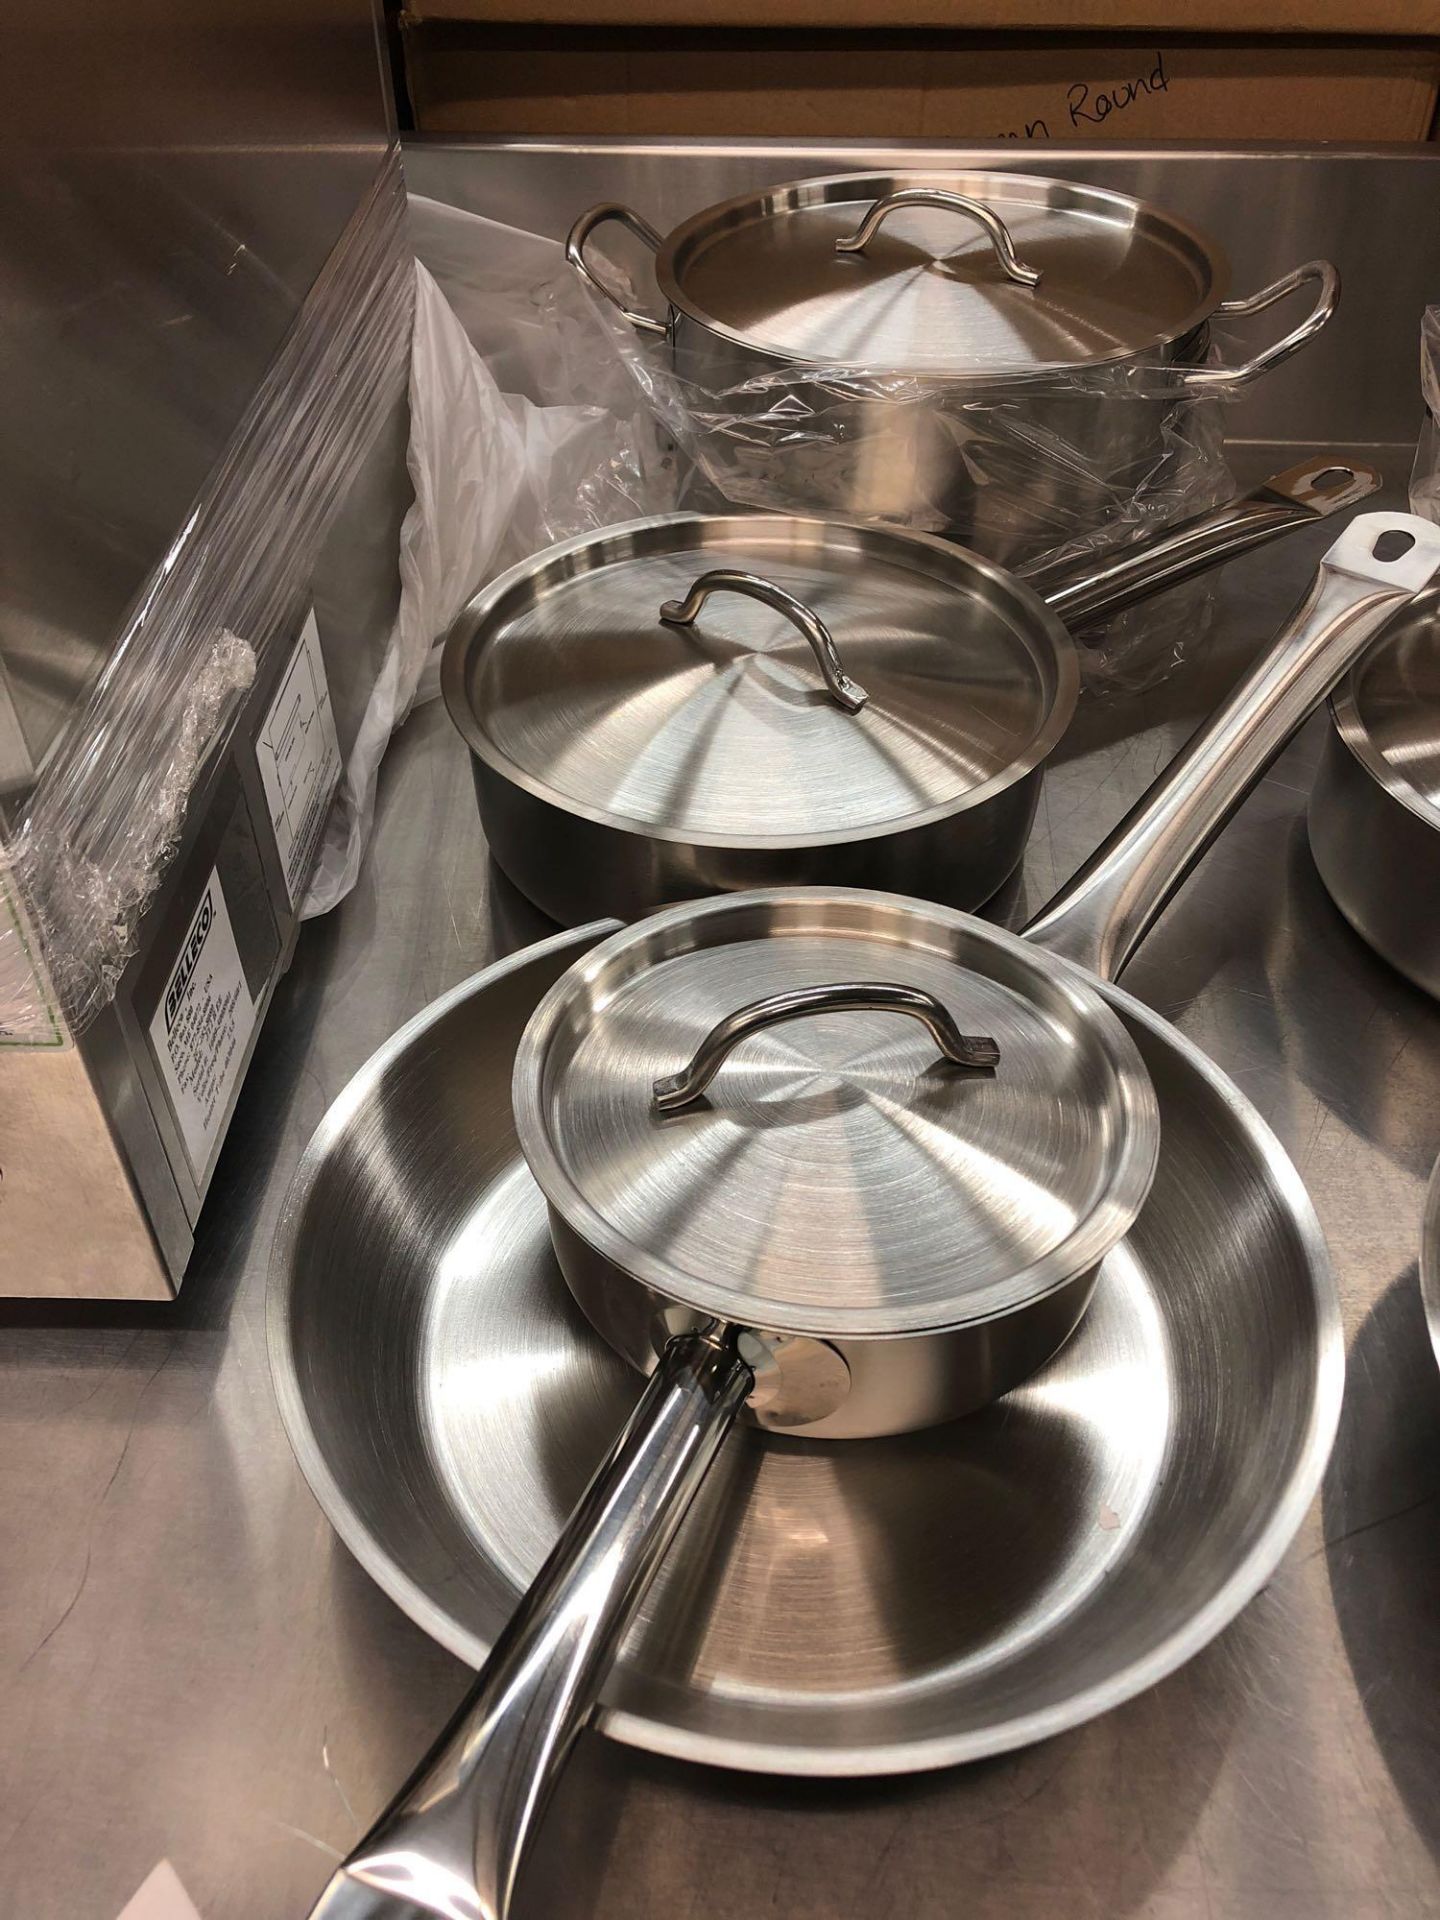 Seven piece stainless steel cookware set